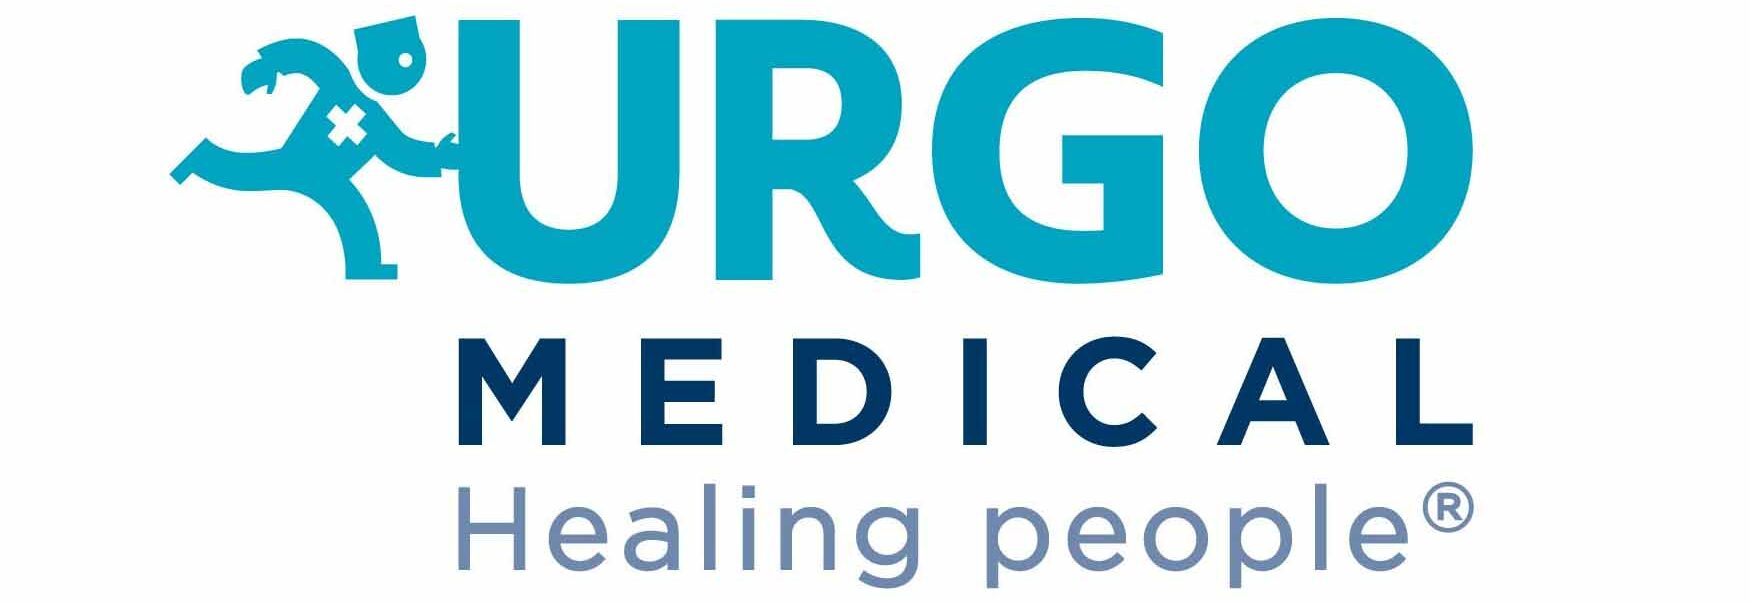 URGO Medical, Corporate Sponsors of the SoTV